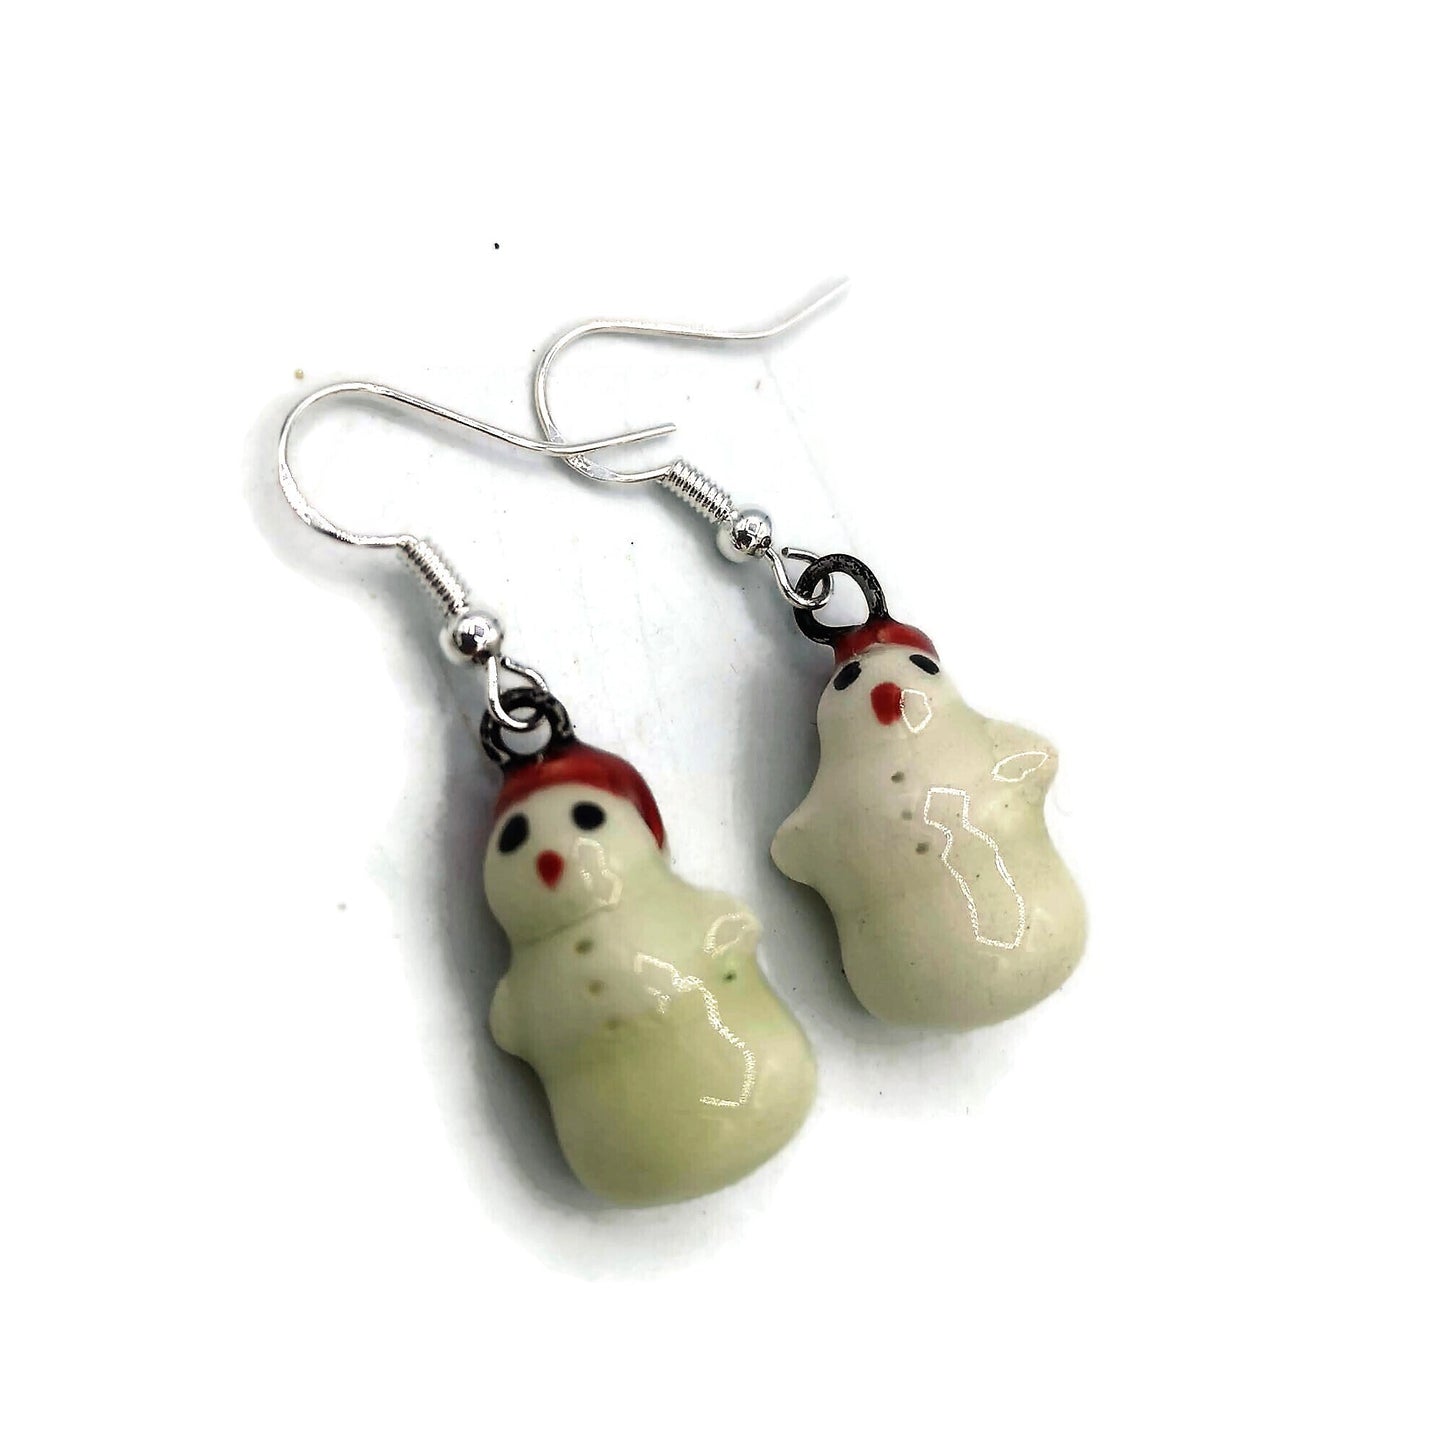 Handmade Ceramic Snowman Earrings, Cool Dangle Earrings, Cute Jewelry Best Gift For Her, Niece Gift From Aunt, Christmas Earrings, Clay - Ceramica Ana Rafael